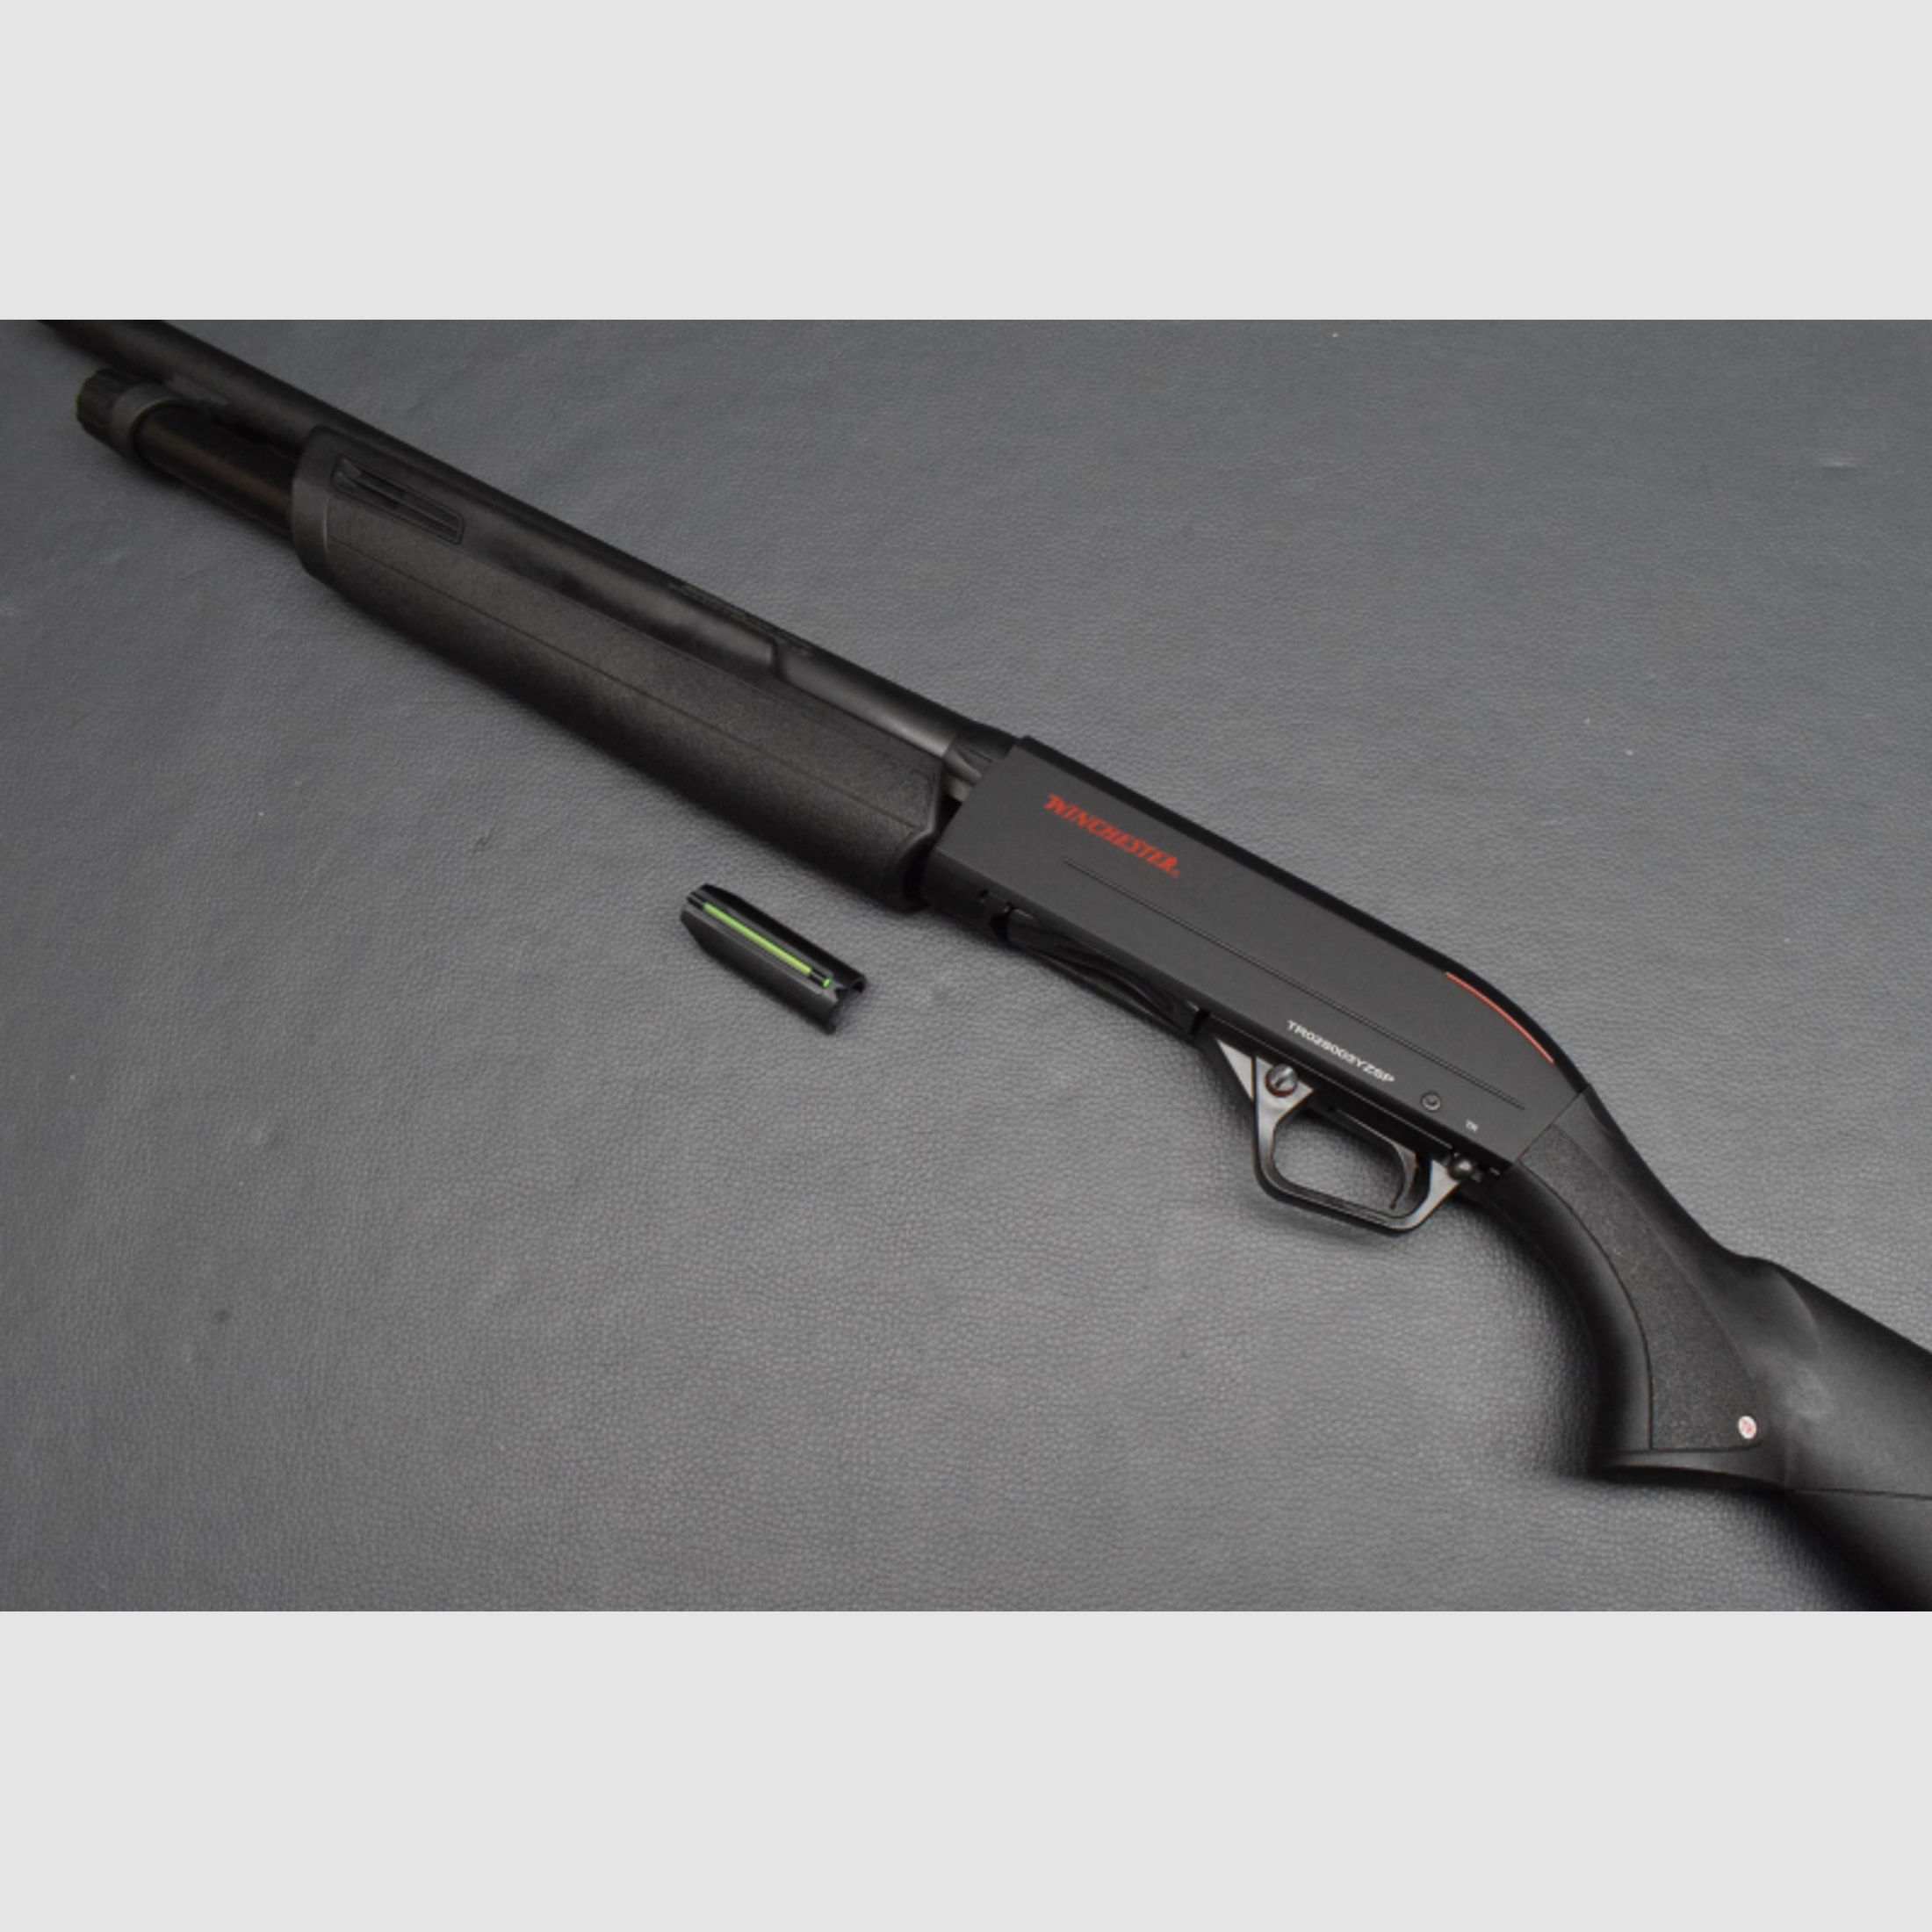 Winchester Repetierflinte, SXP Tracker Smooth, Lauflänge 46cm, Kal. 12/76 Magnum, Neuware